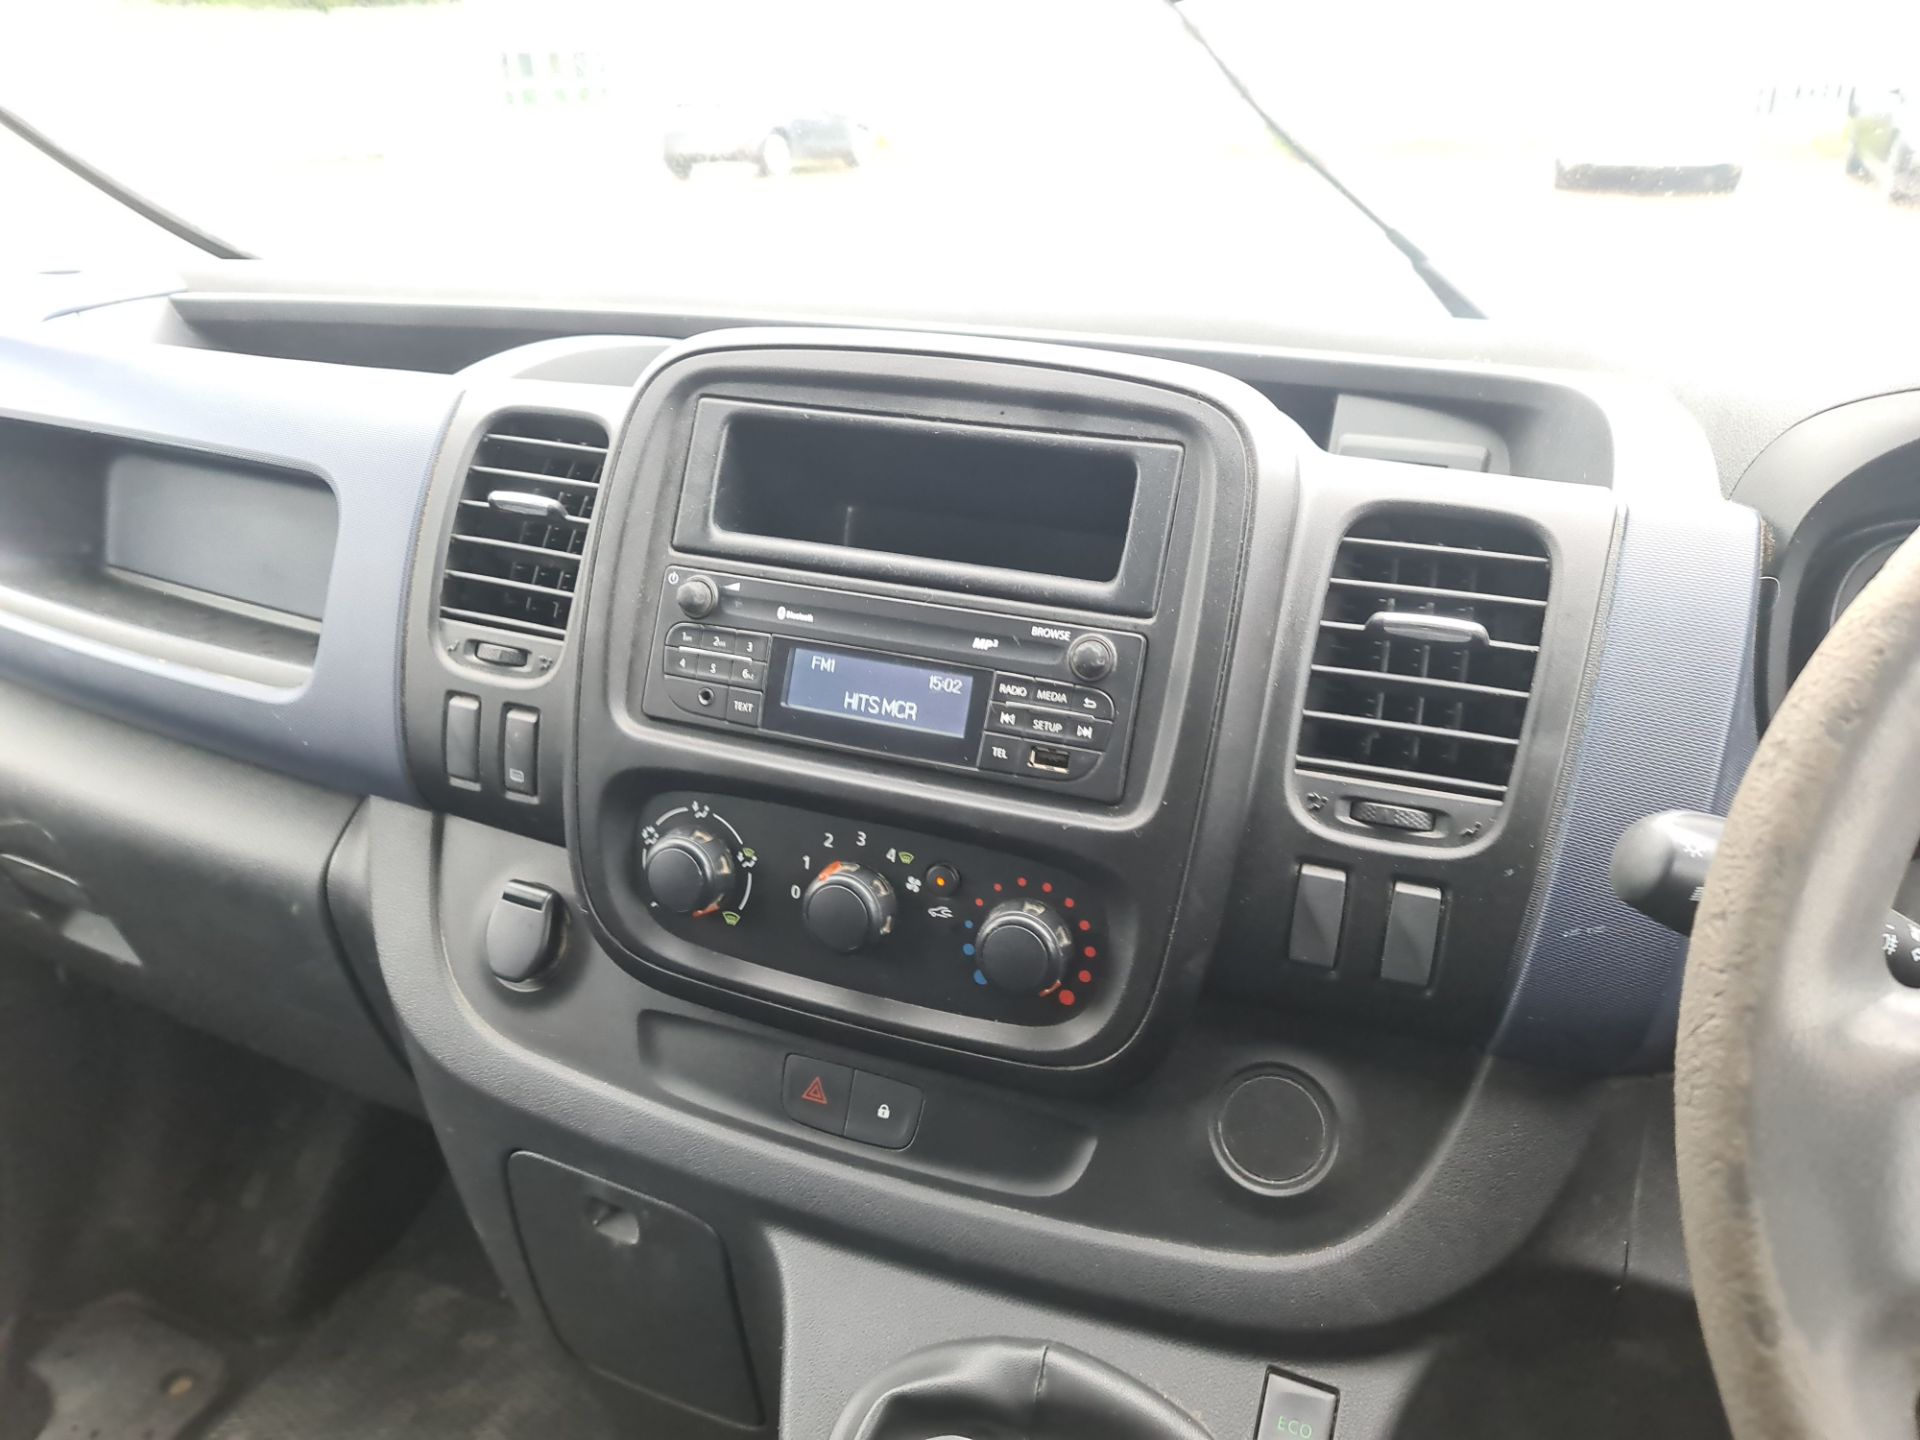 2015 Vauxhall Vivaro 2900 CDTi panel van - Image 52 of 66